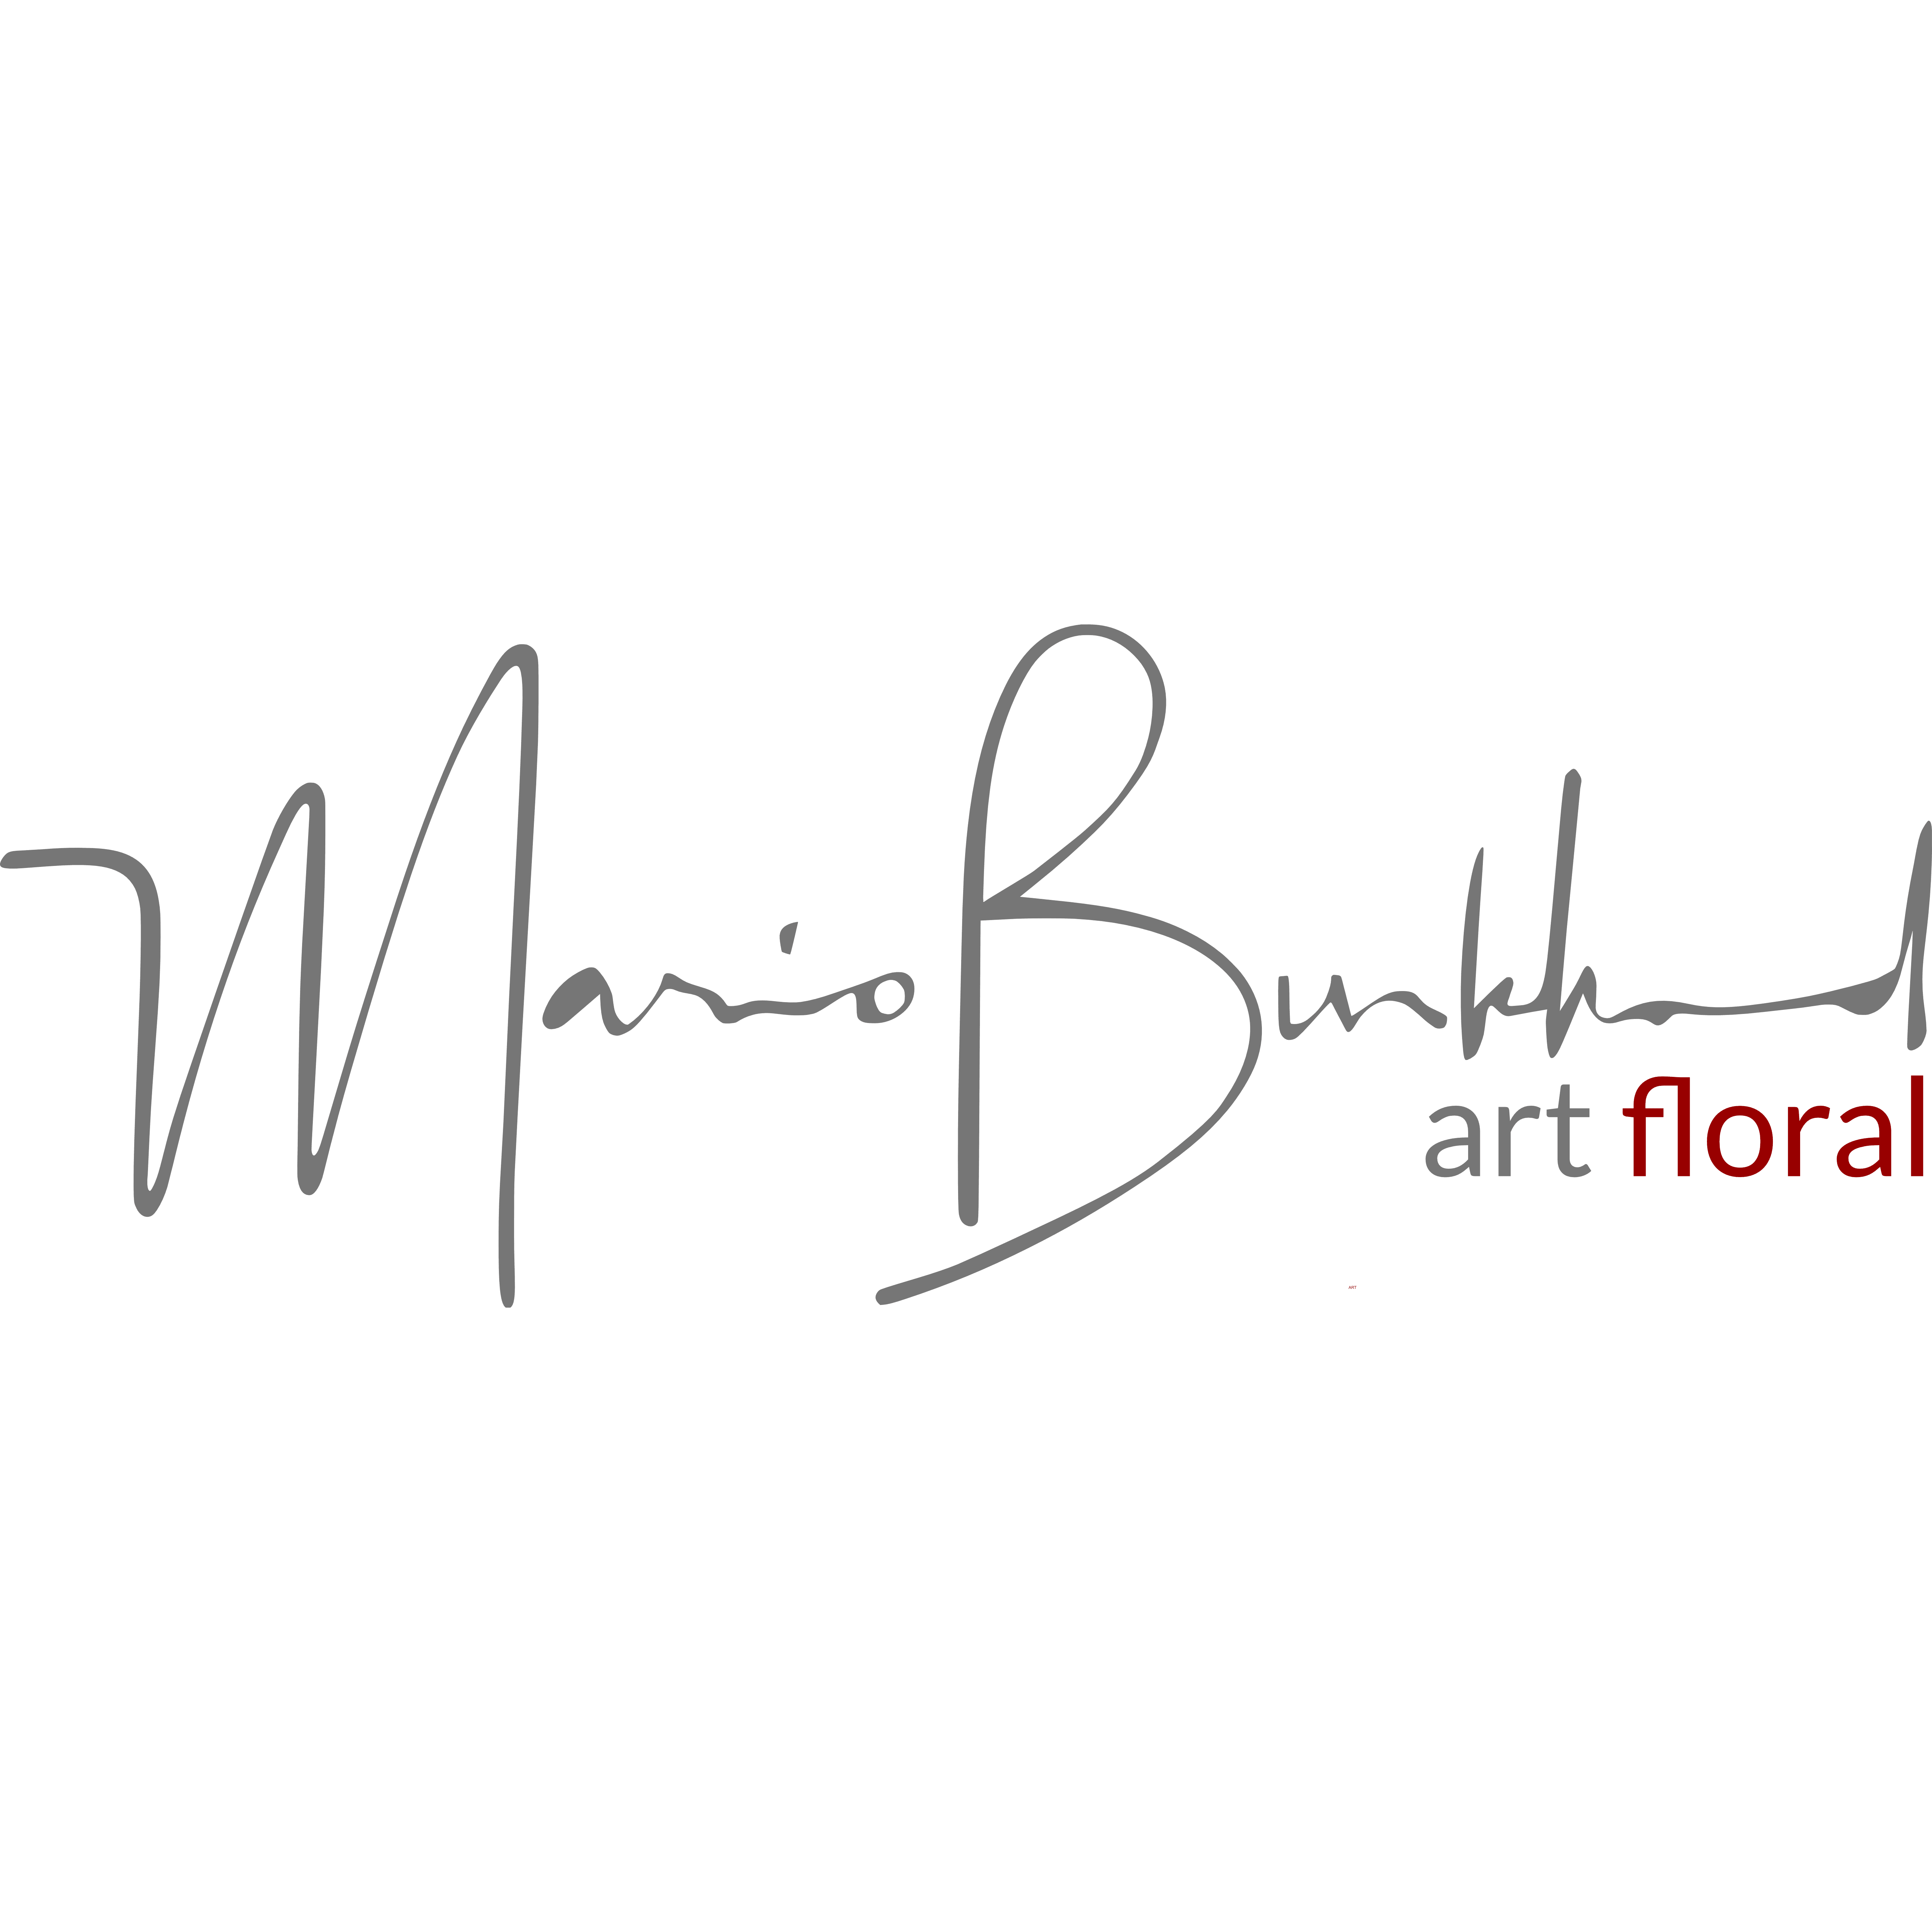 mario burkhard art floral gmbh Logo